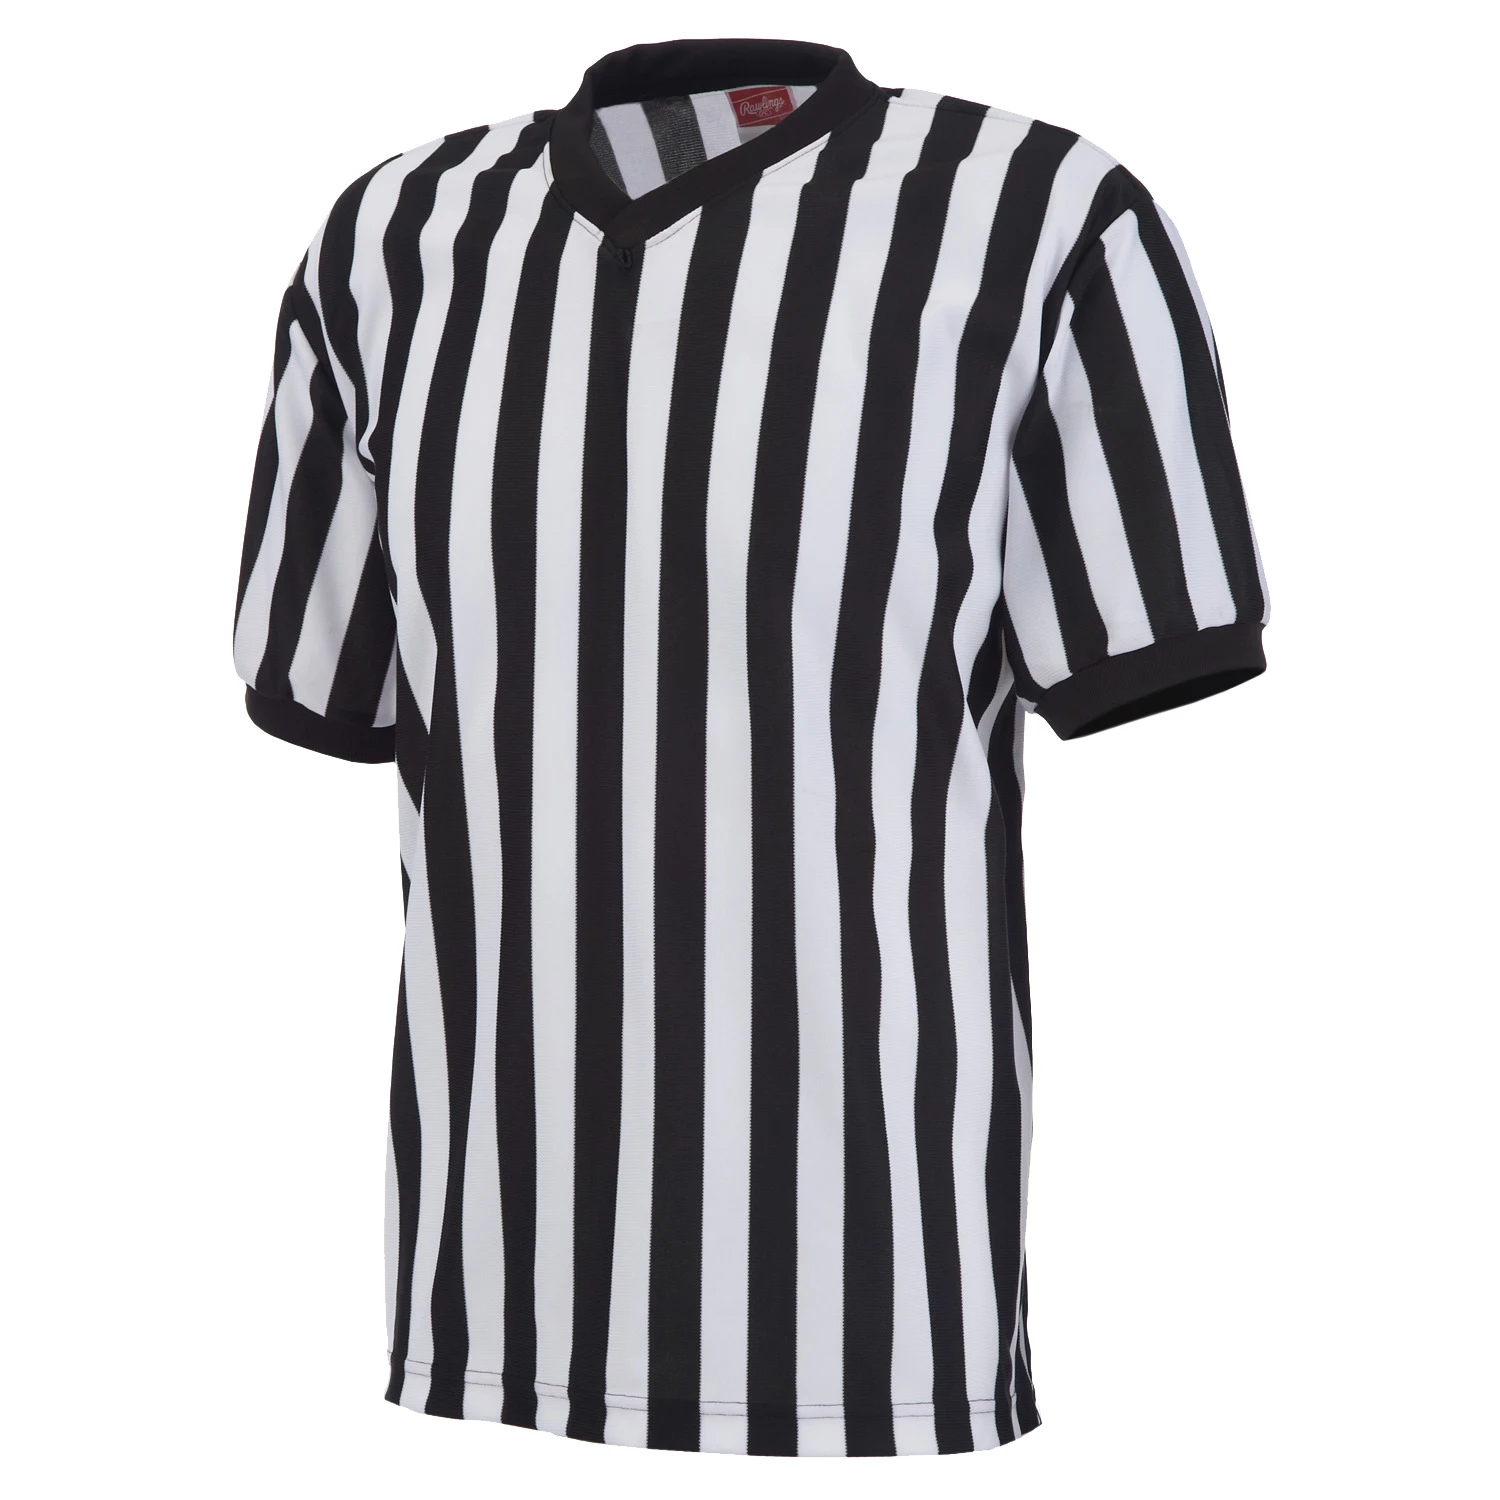 Basketball Referee Uniform 77